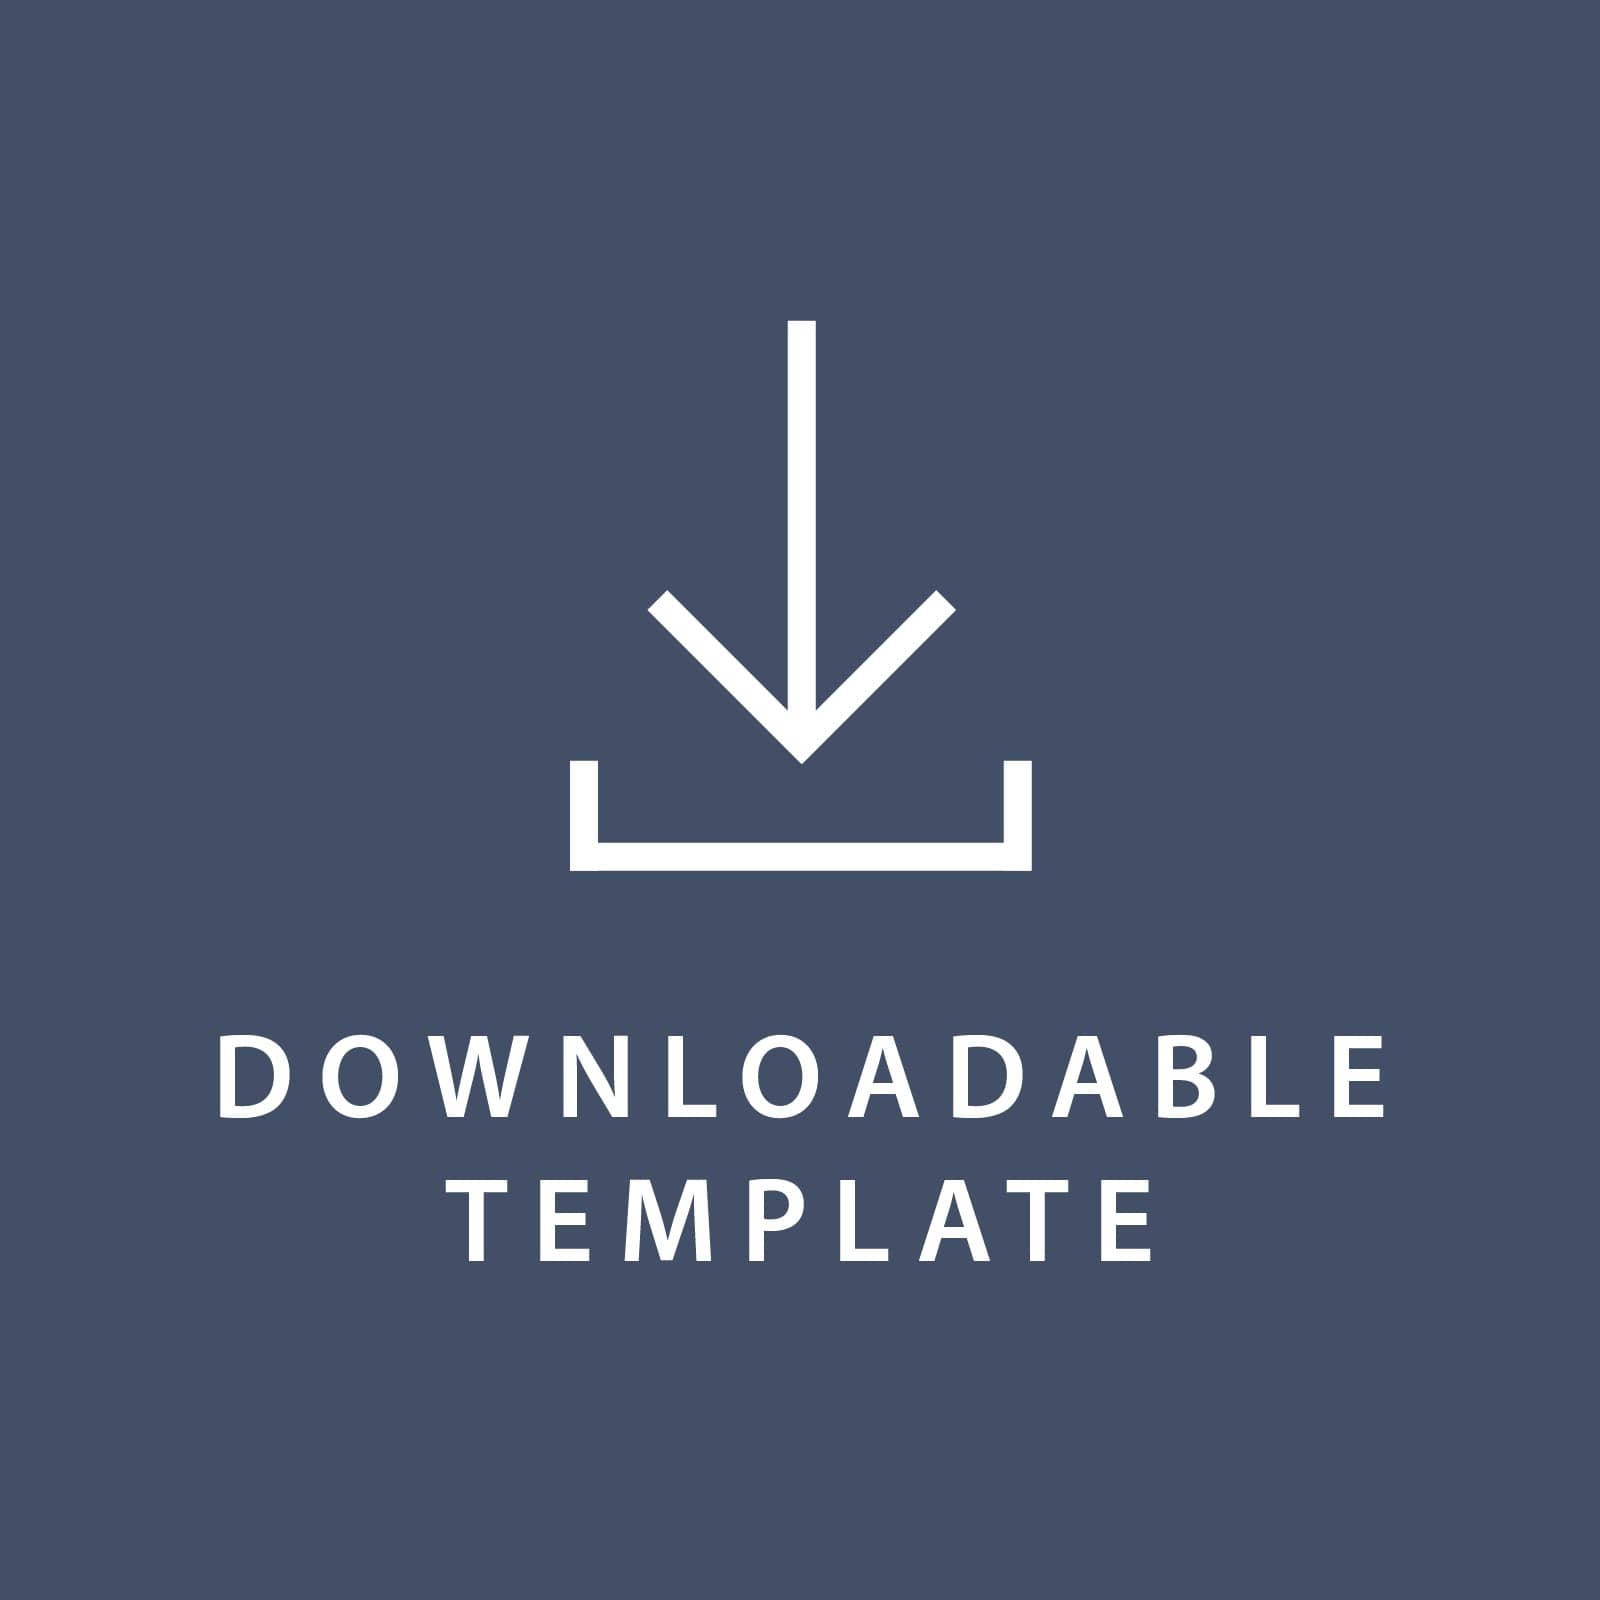 Template for 8.5 x 11 Post Cards Gartner Studios Template tmplt0890